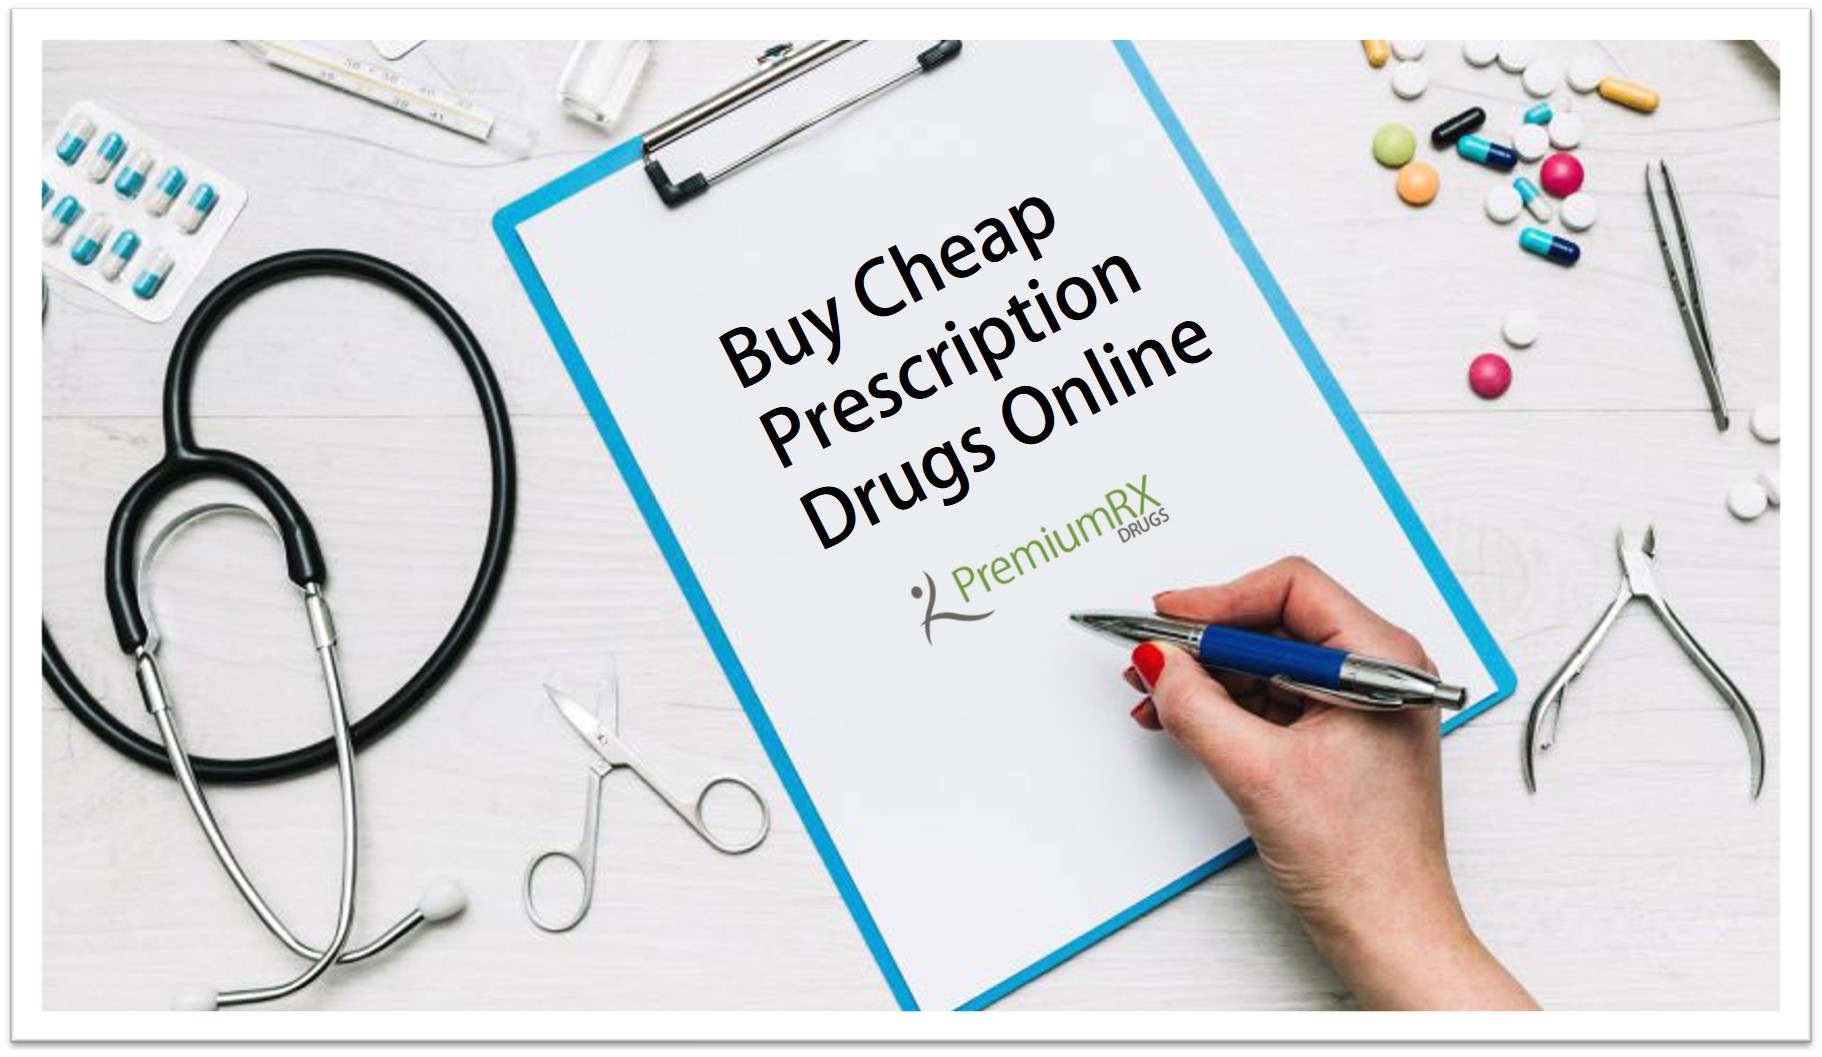 Buy Cheap Prescription Drugs Online